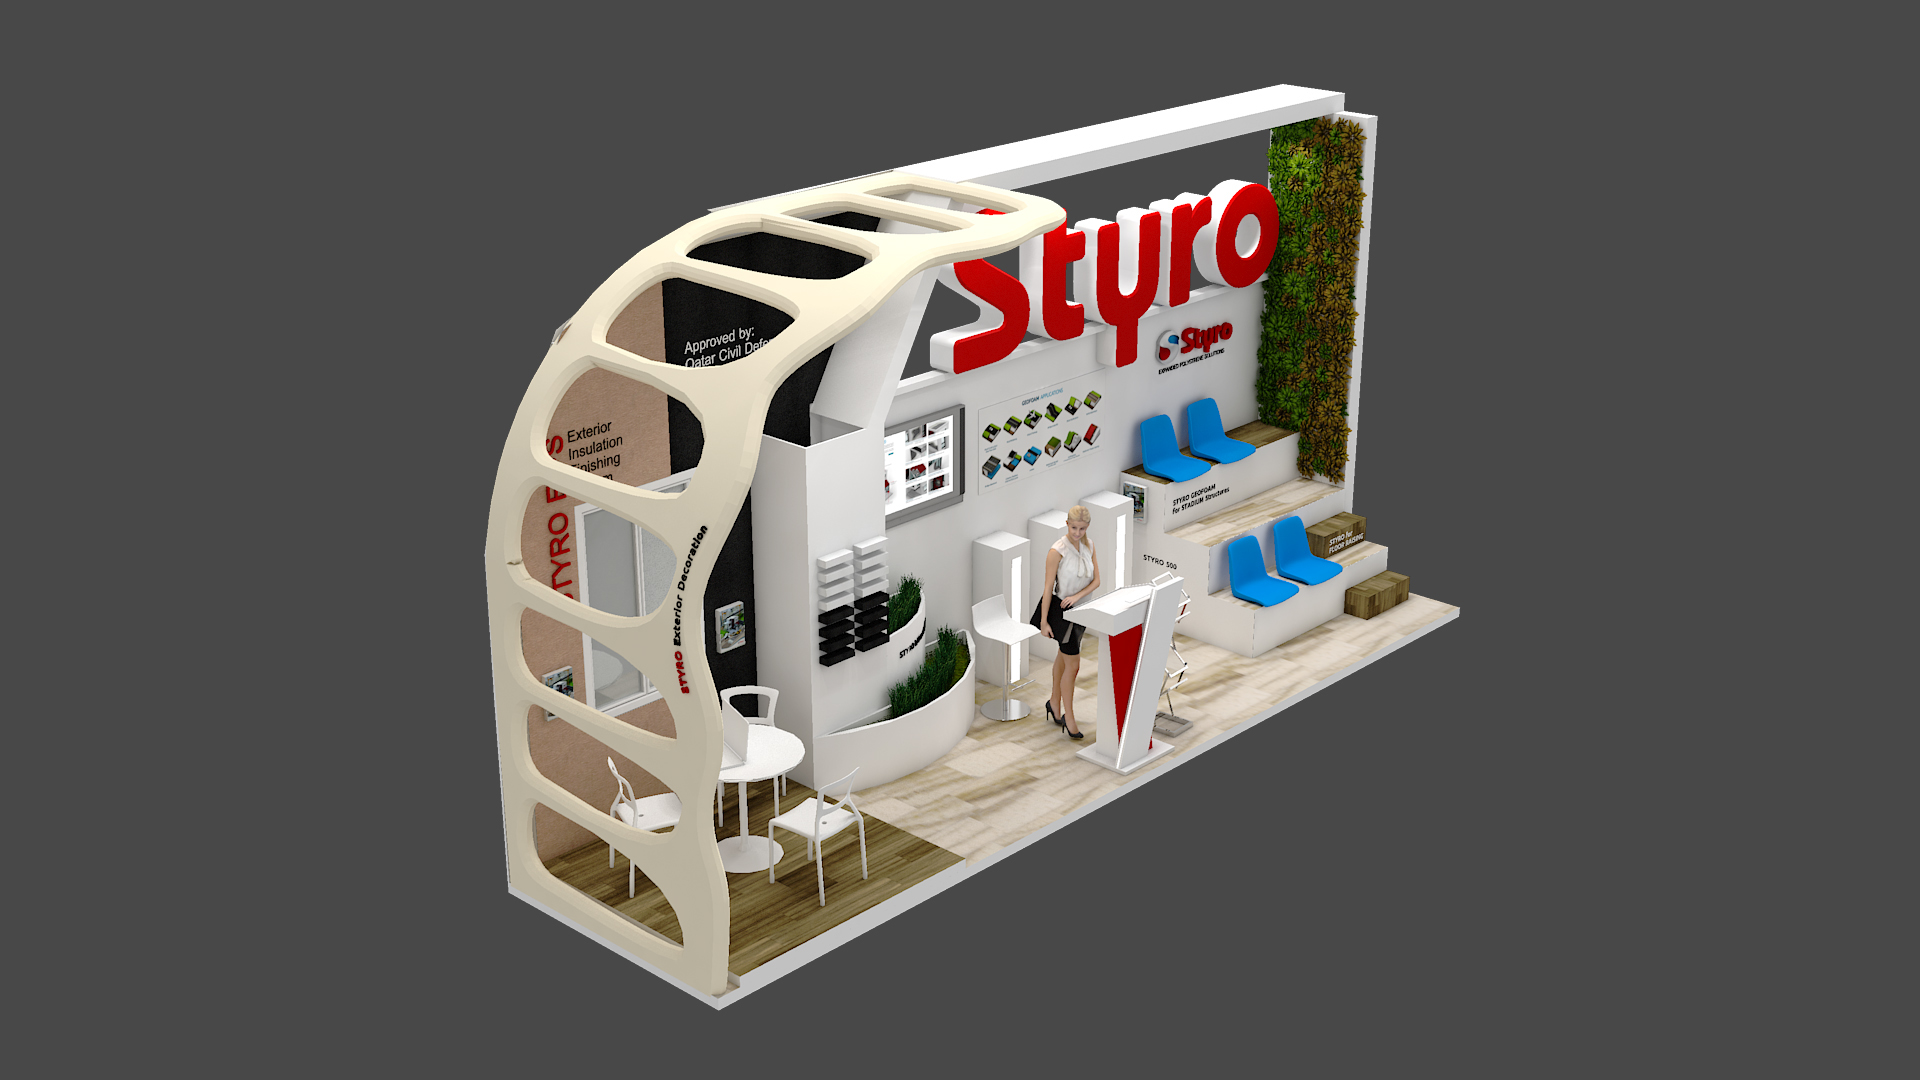 STYRO Exhibition Design for Project Qatar-2